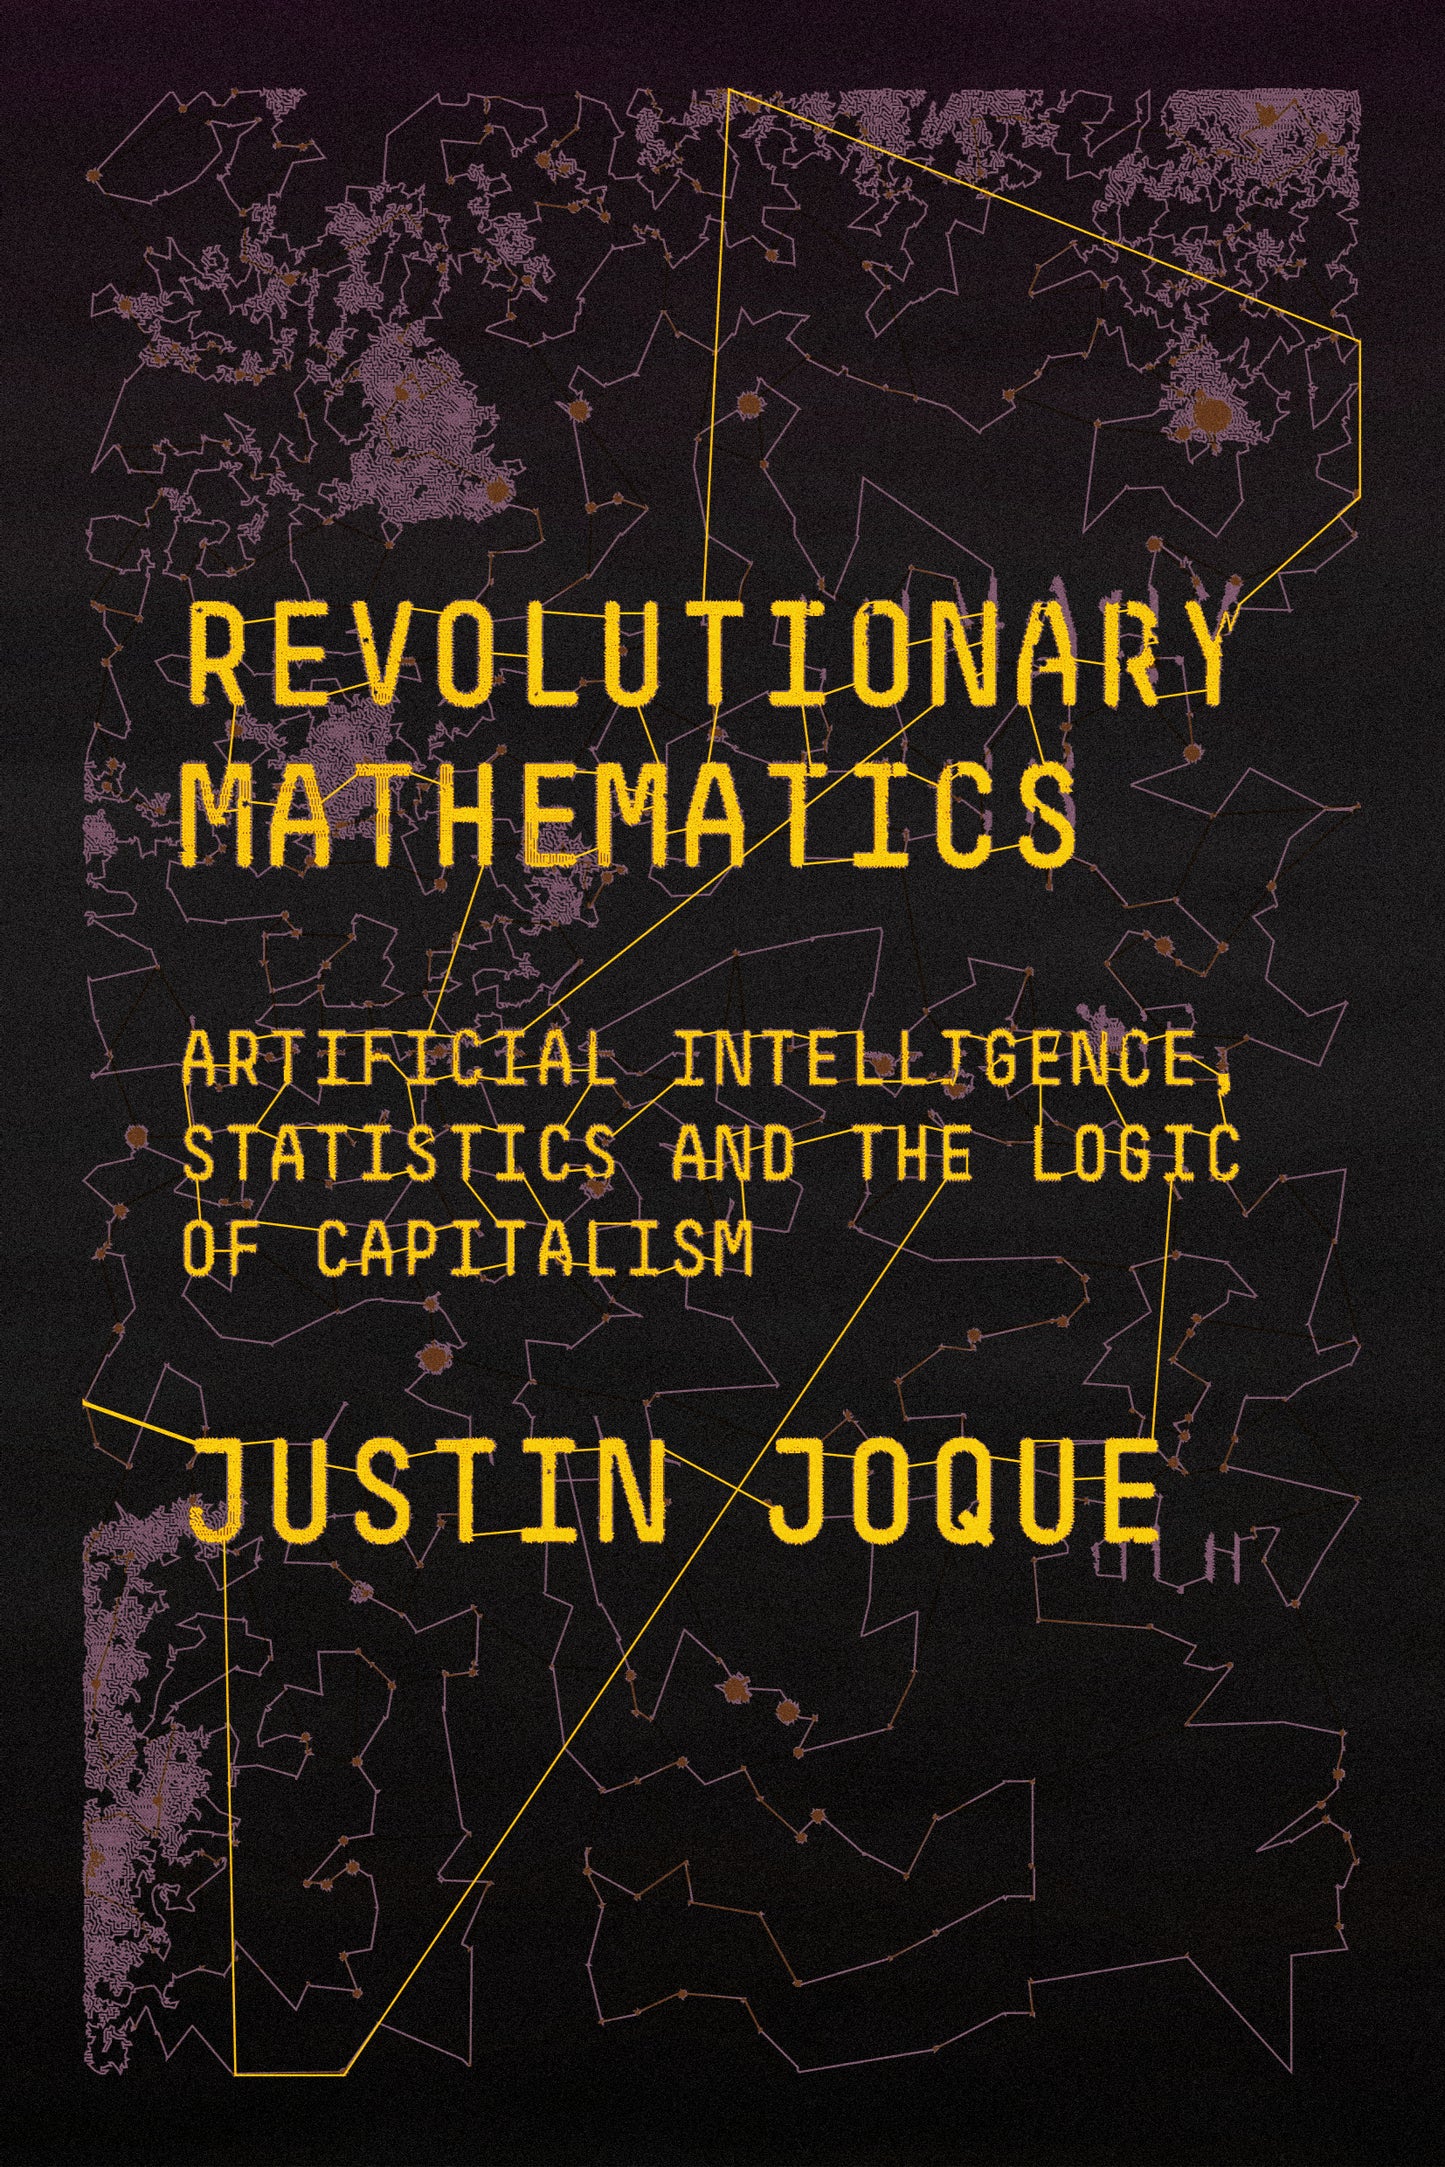 Revolutionary Mathematics, by Justin Joque